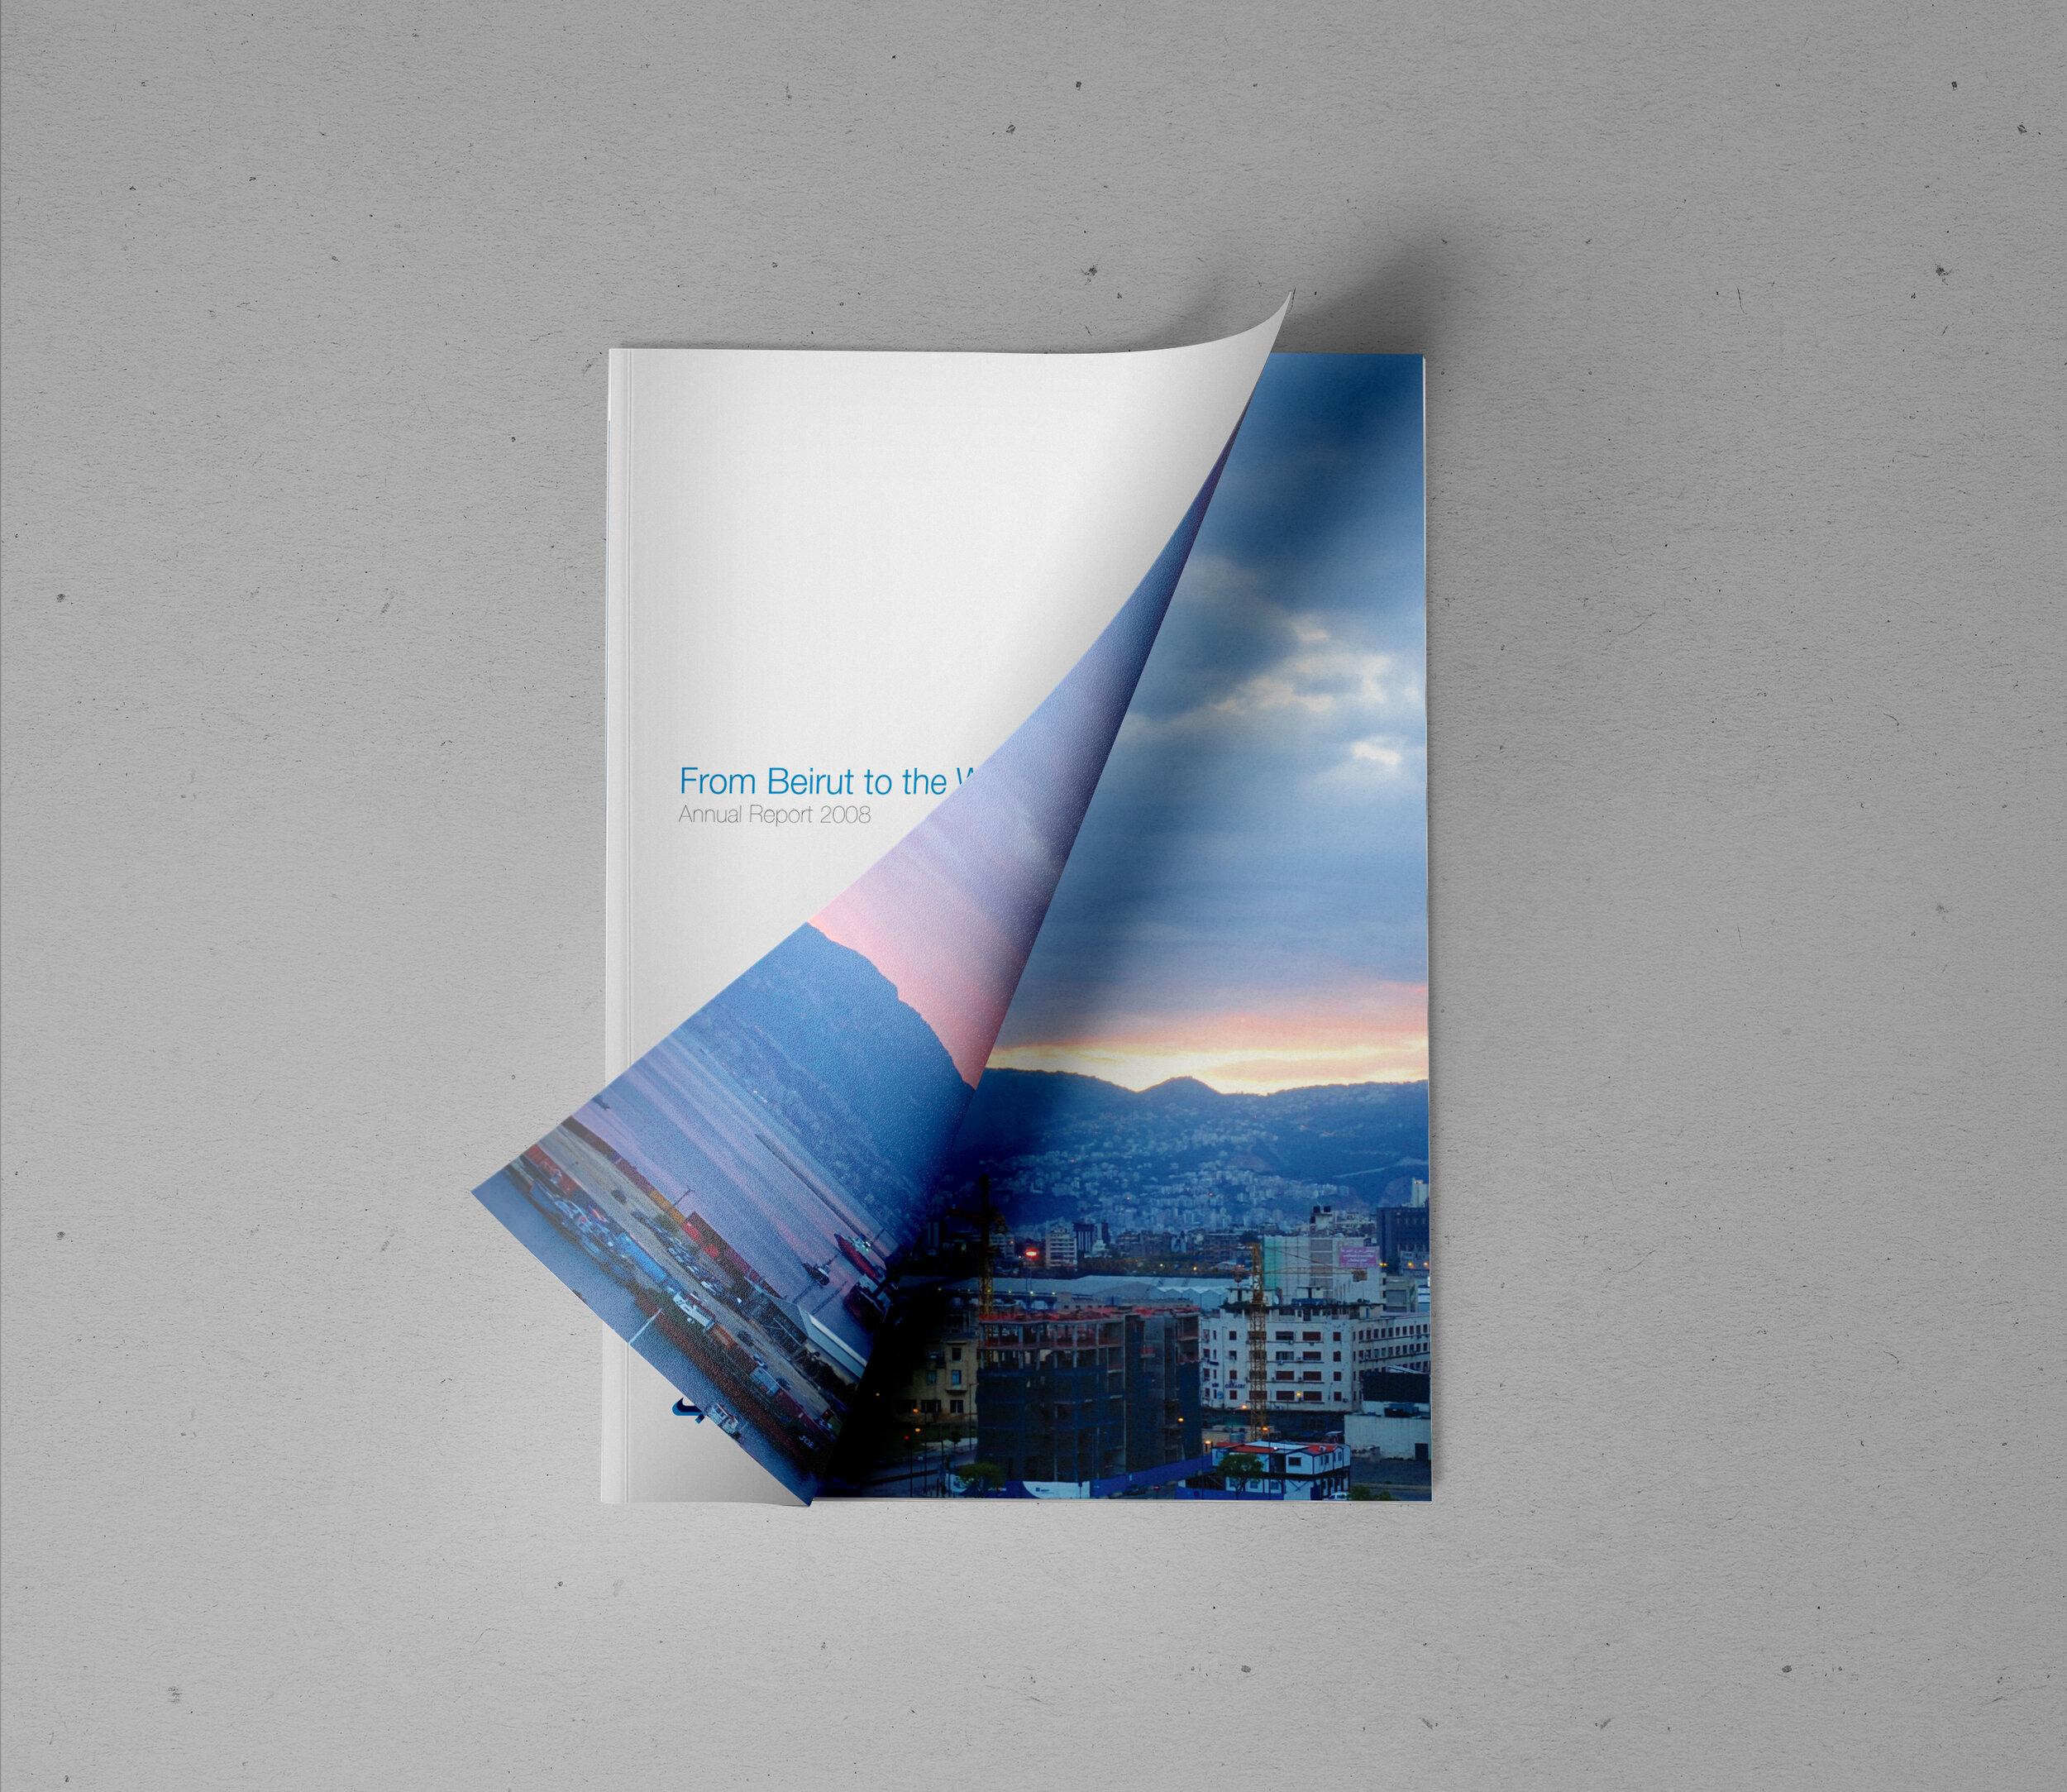 BOB_Bank_of_beirut_annual_report_2008_creative_layout_design_book_print_cover_circle_agency_uae_dubai_visual_communication_2.jpg